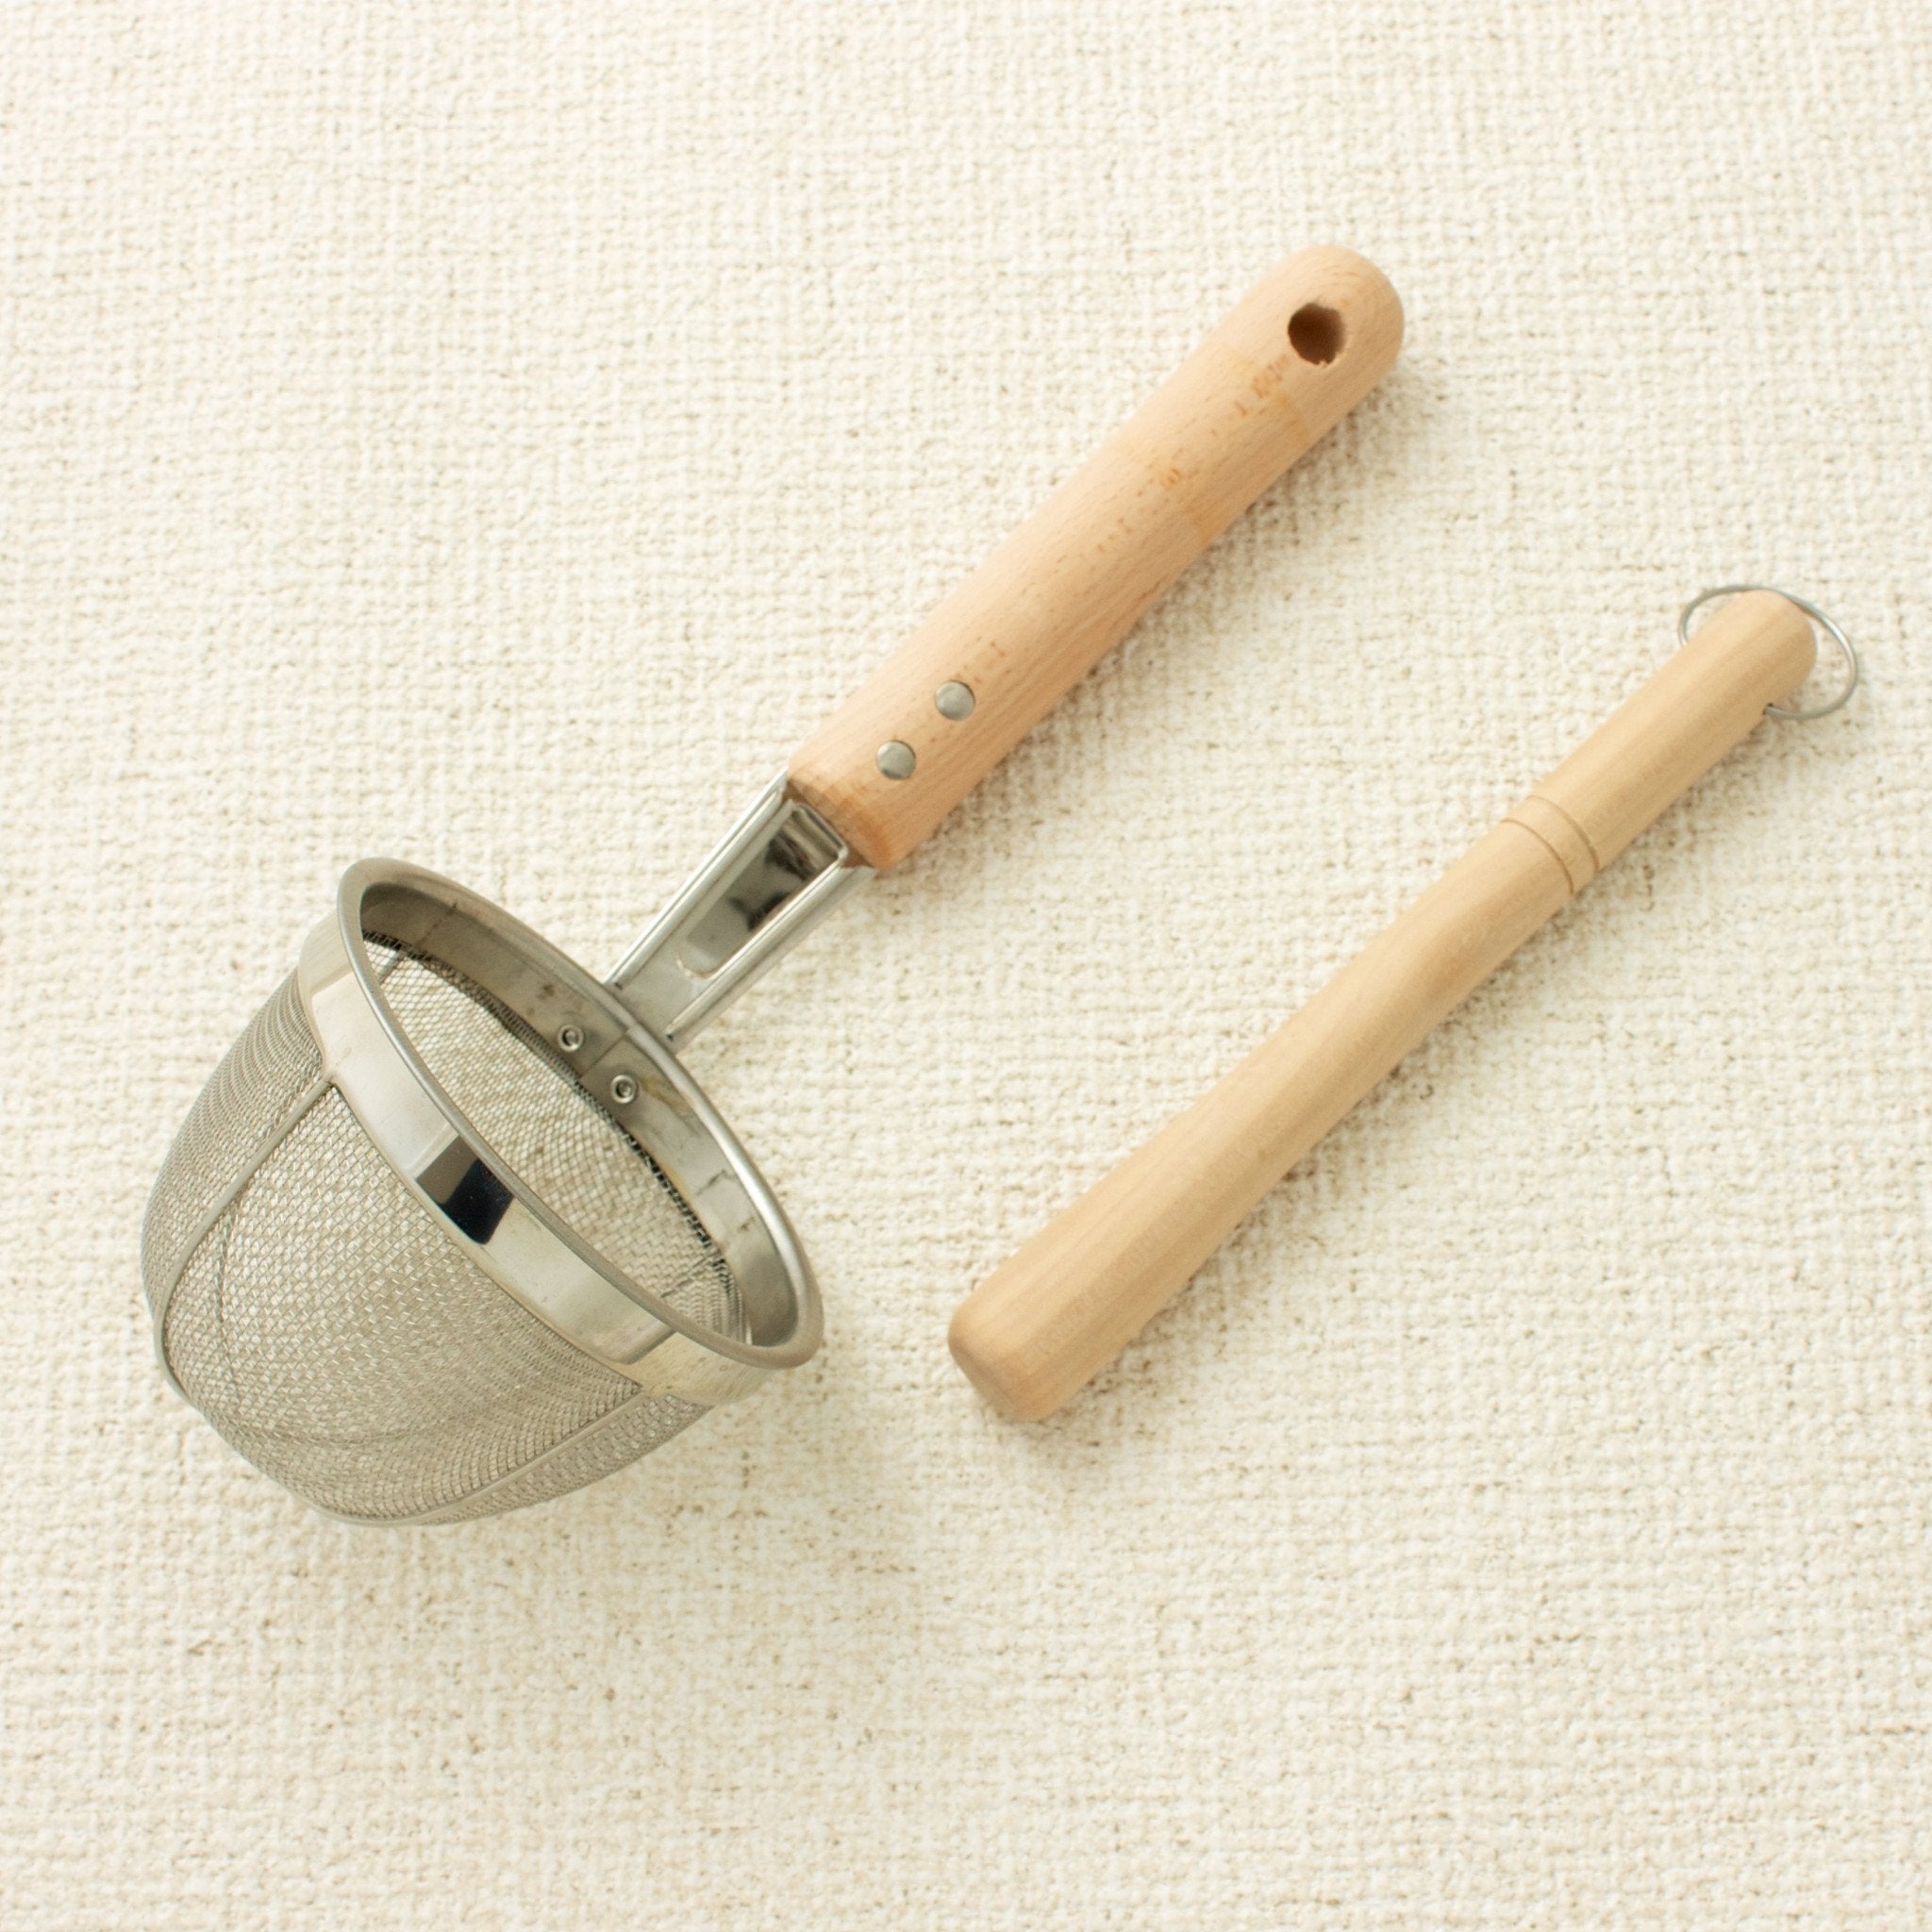 5 Must-Buy Japanese kitchen utensils – Master cooking!